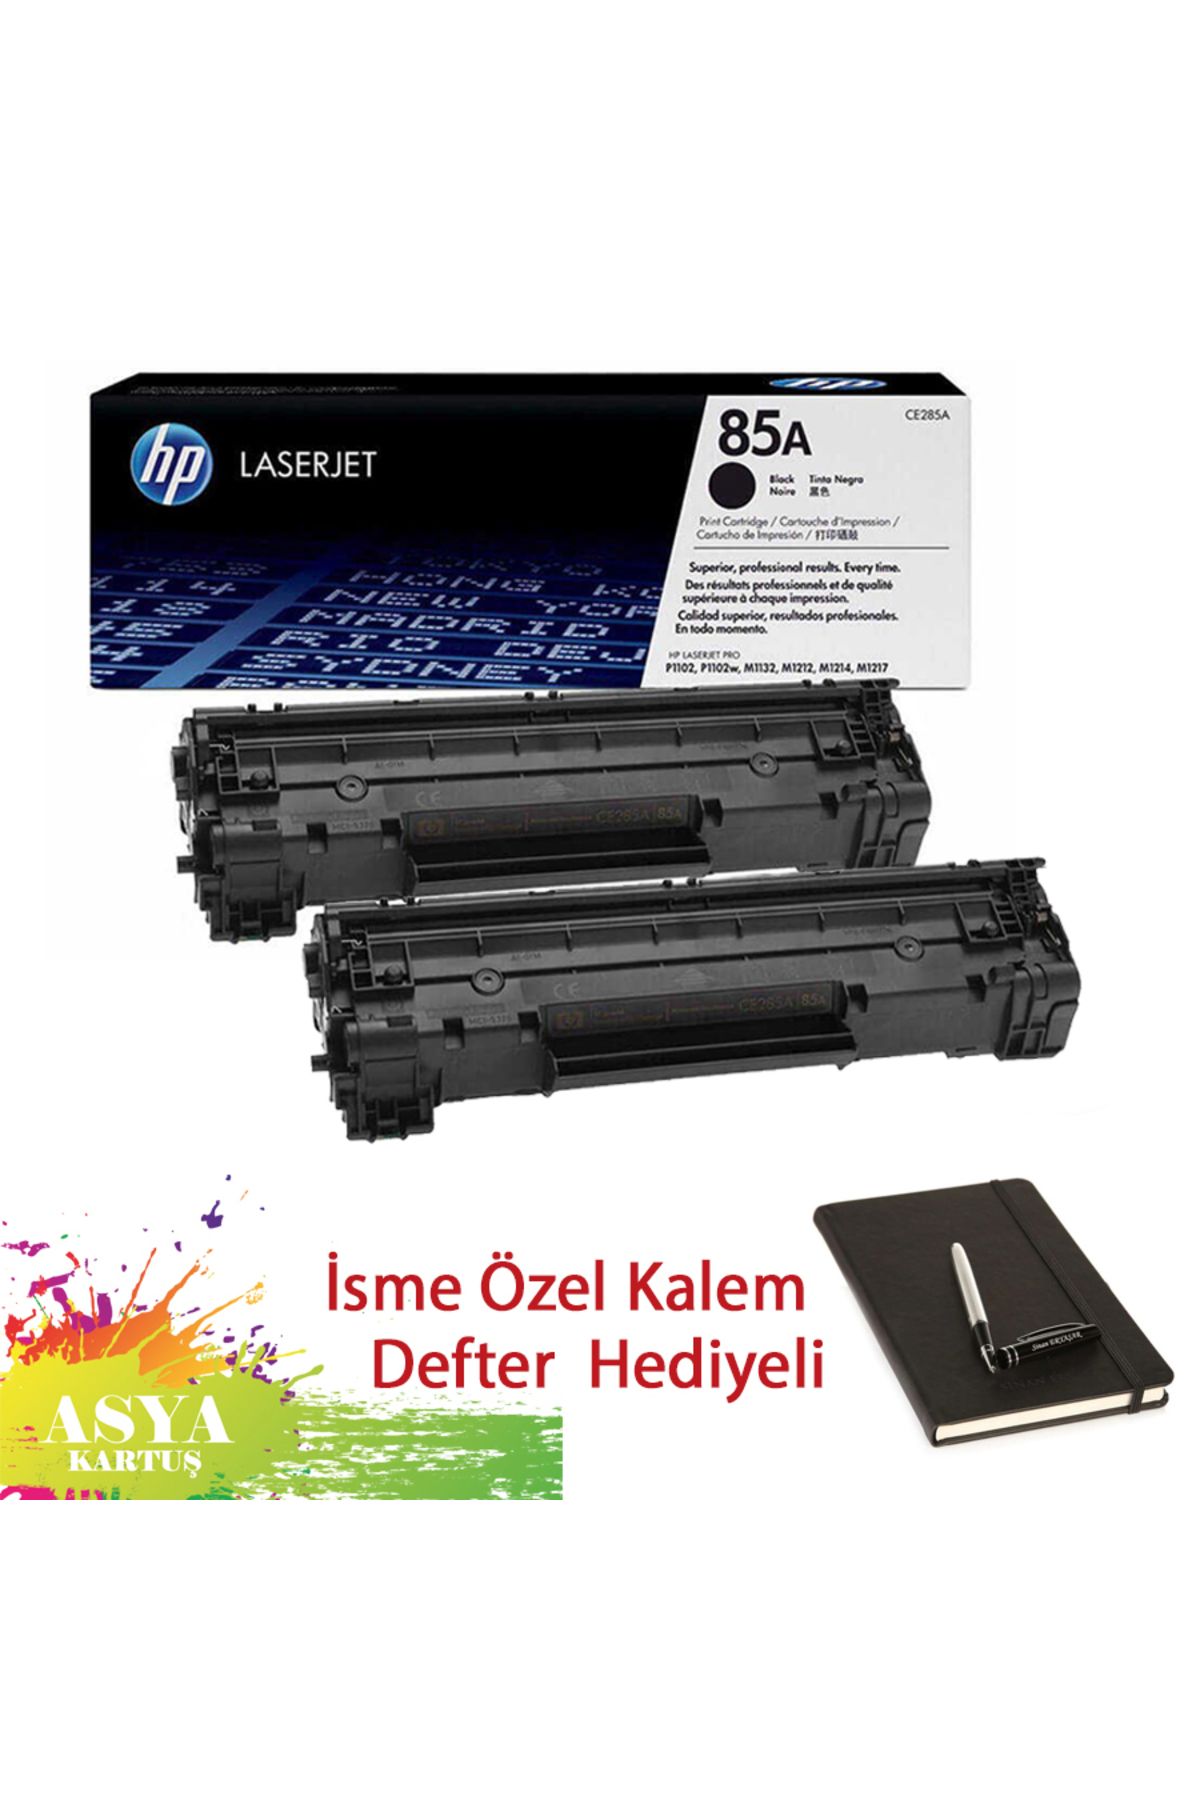 HP Laserjet Pro M1132 MFP Uyumlu, Hp 85A (CE285A) 1600 Sayfa Baskı Kapasiteli 2'li Orijinal Toner